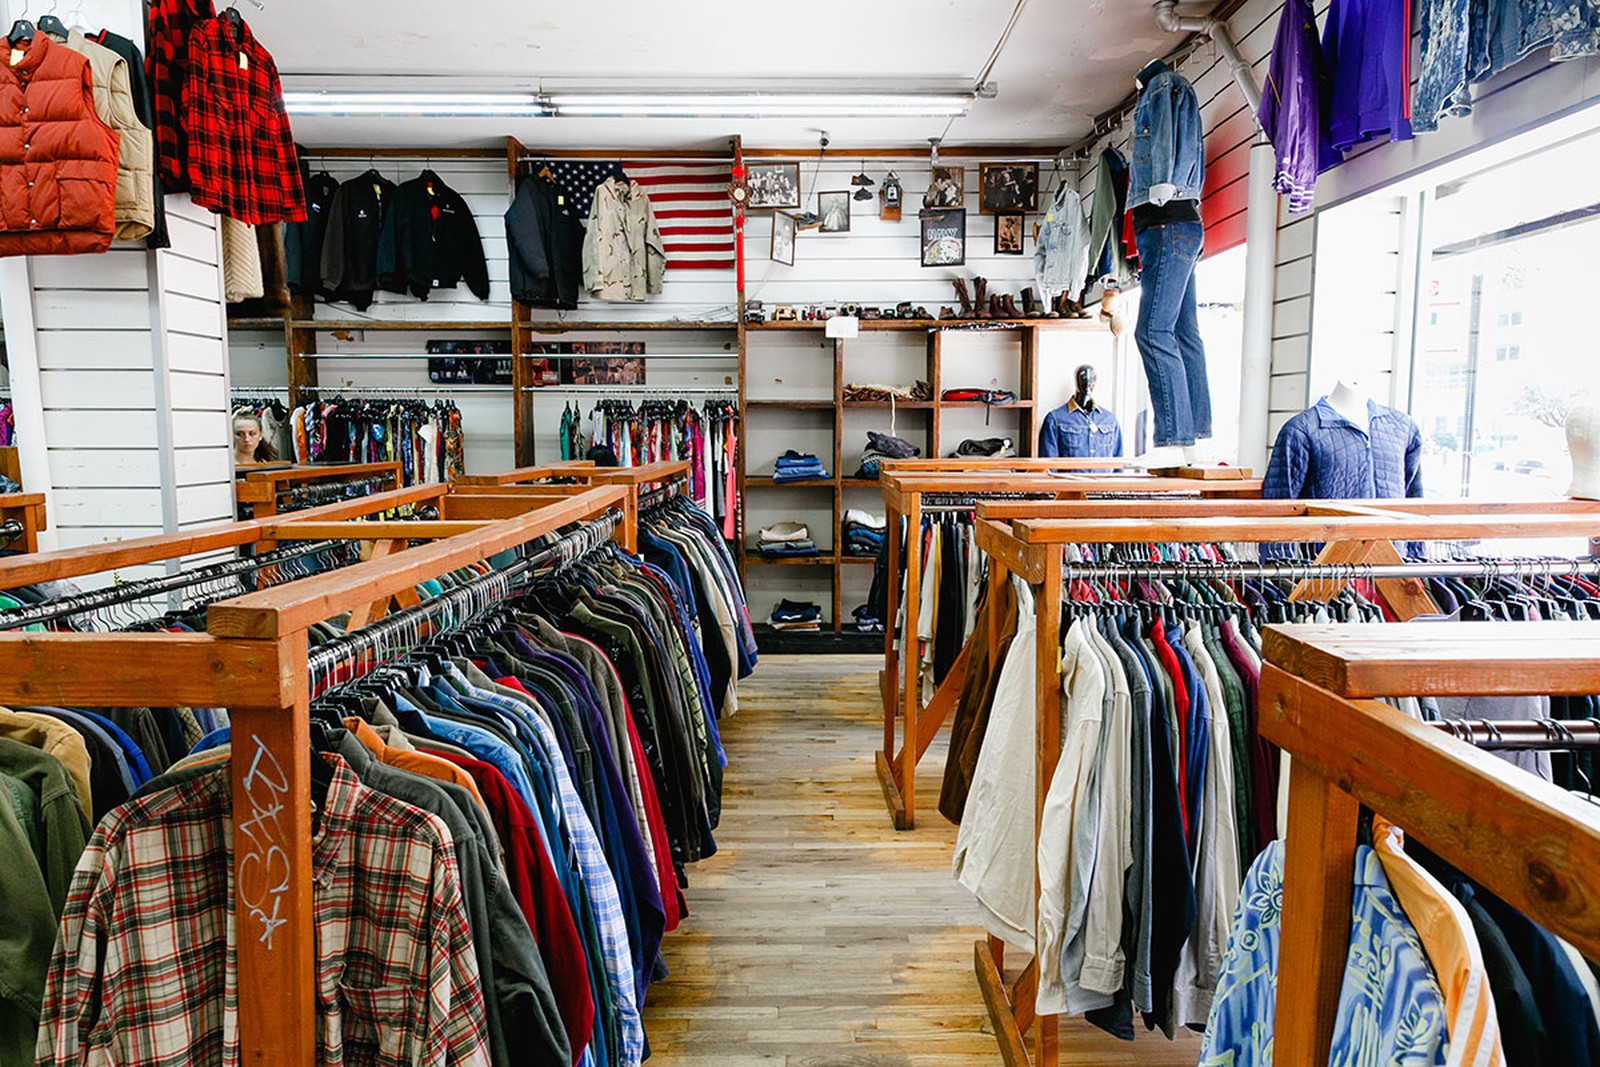 1 item shop. Shop in shop одежда. Фон для магазина одежды. Shopping in the USA одежда. Маркетплейс одежды.